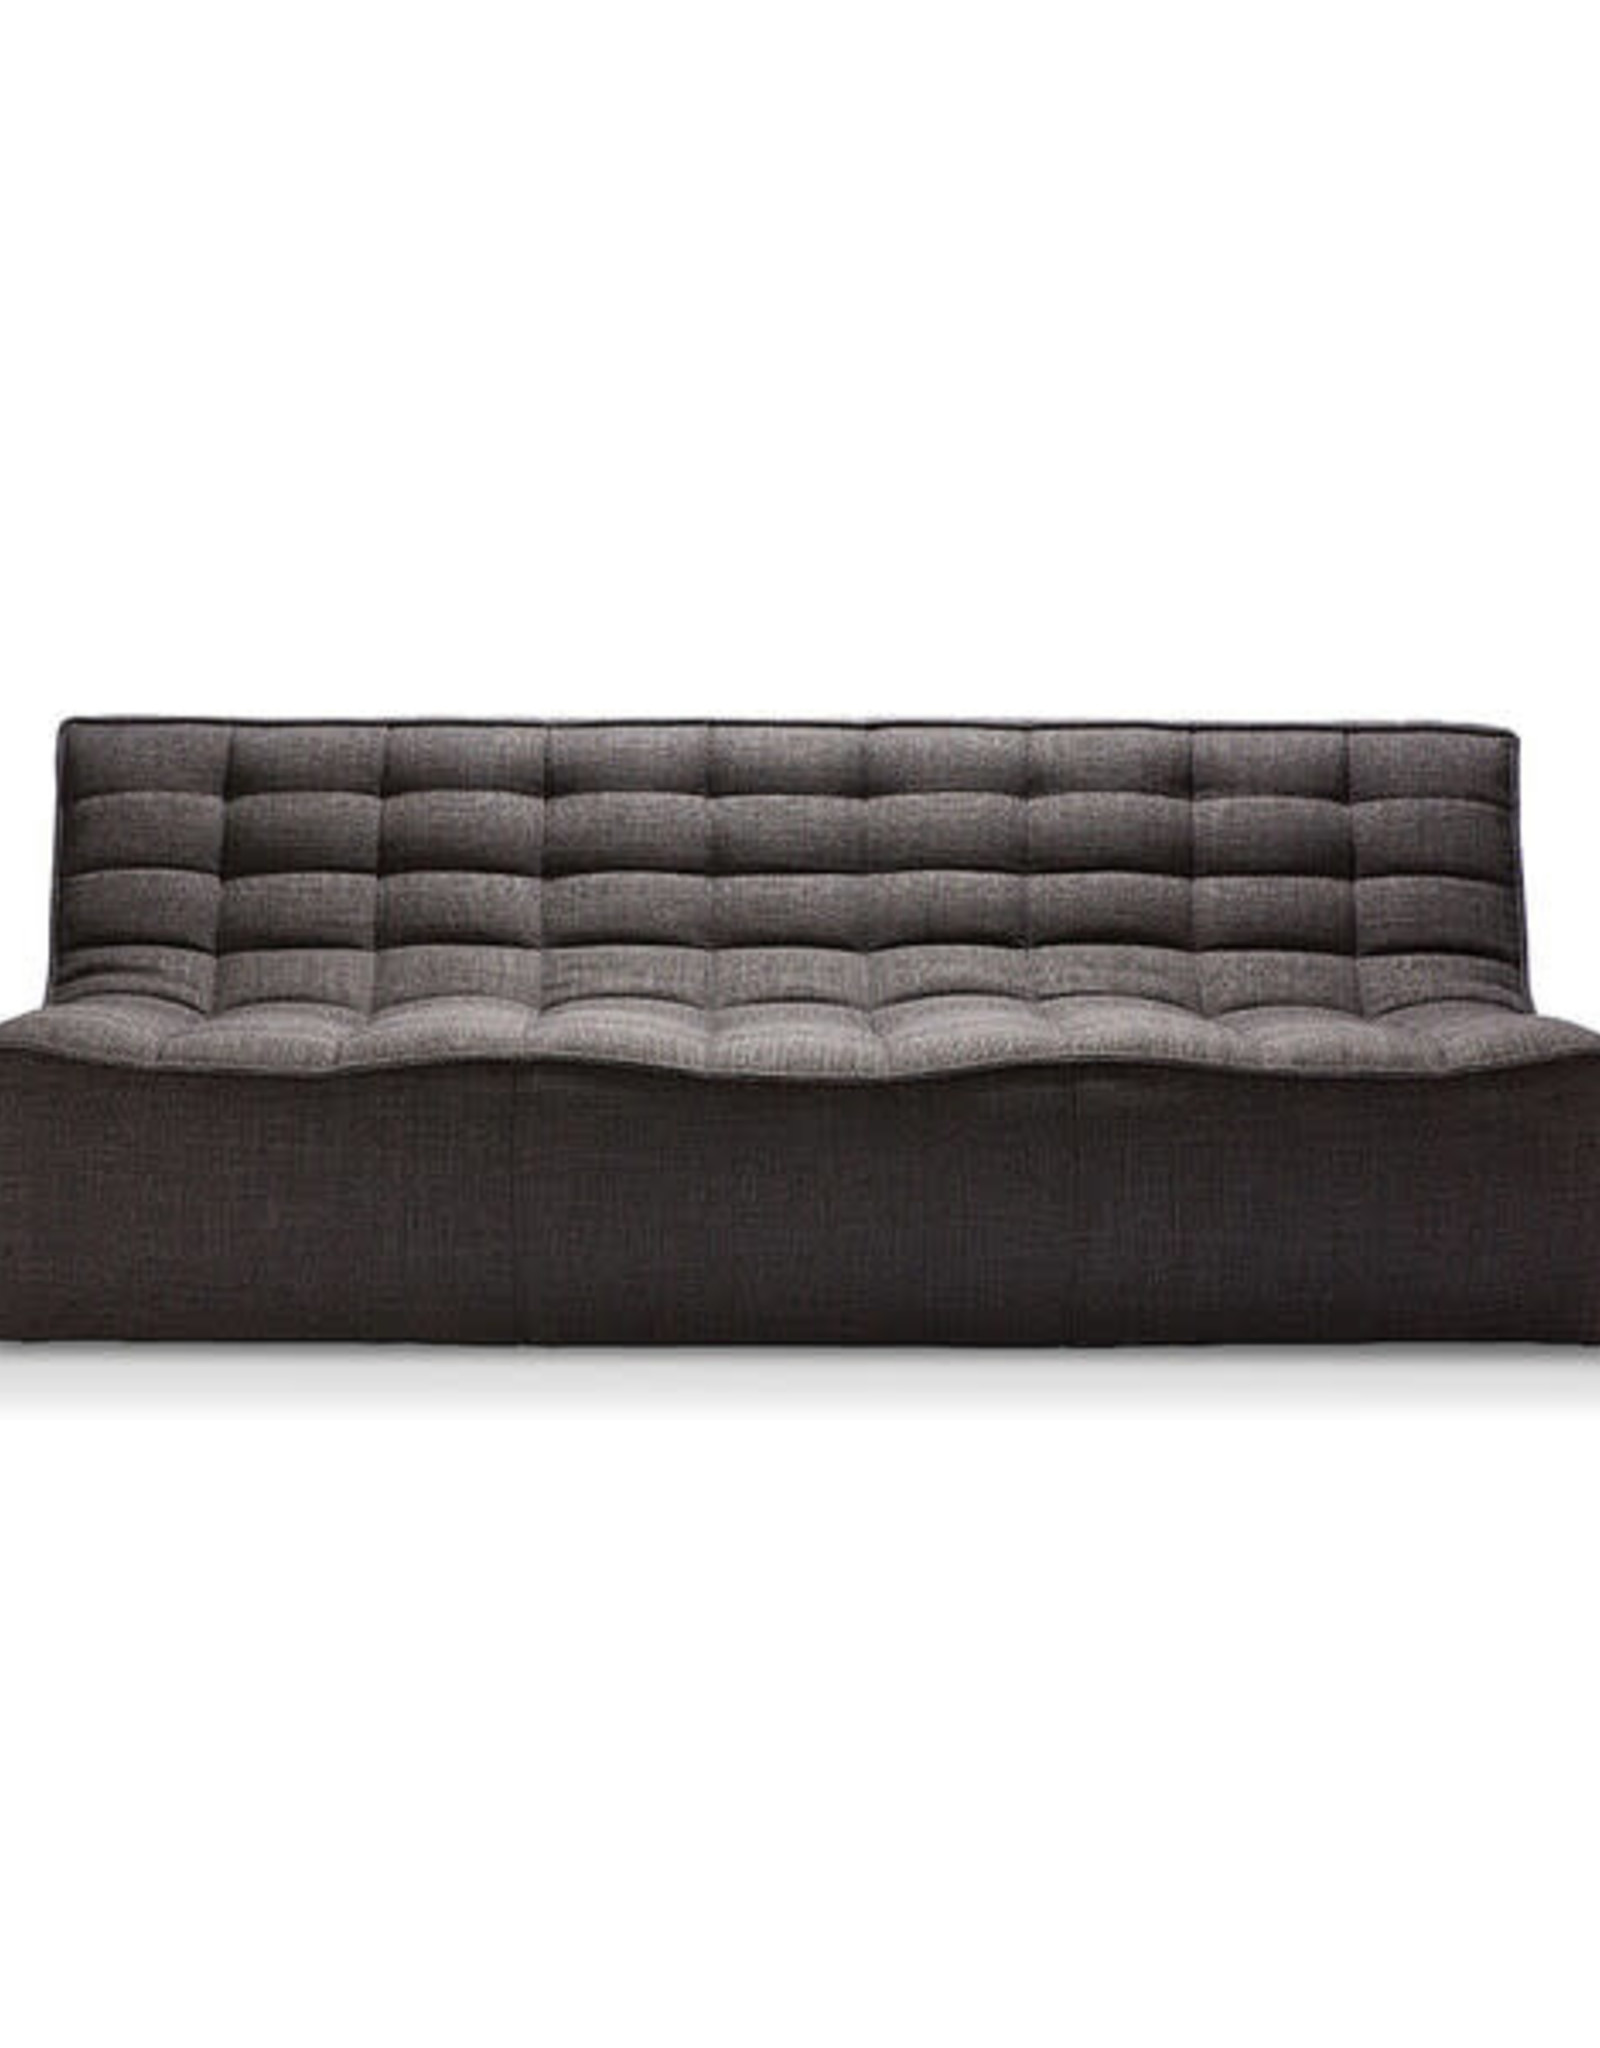 N701 Sofa,  Three-Seater